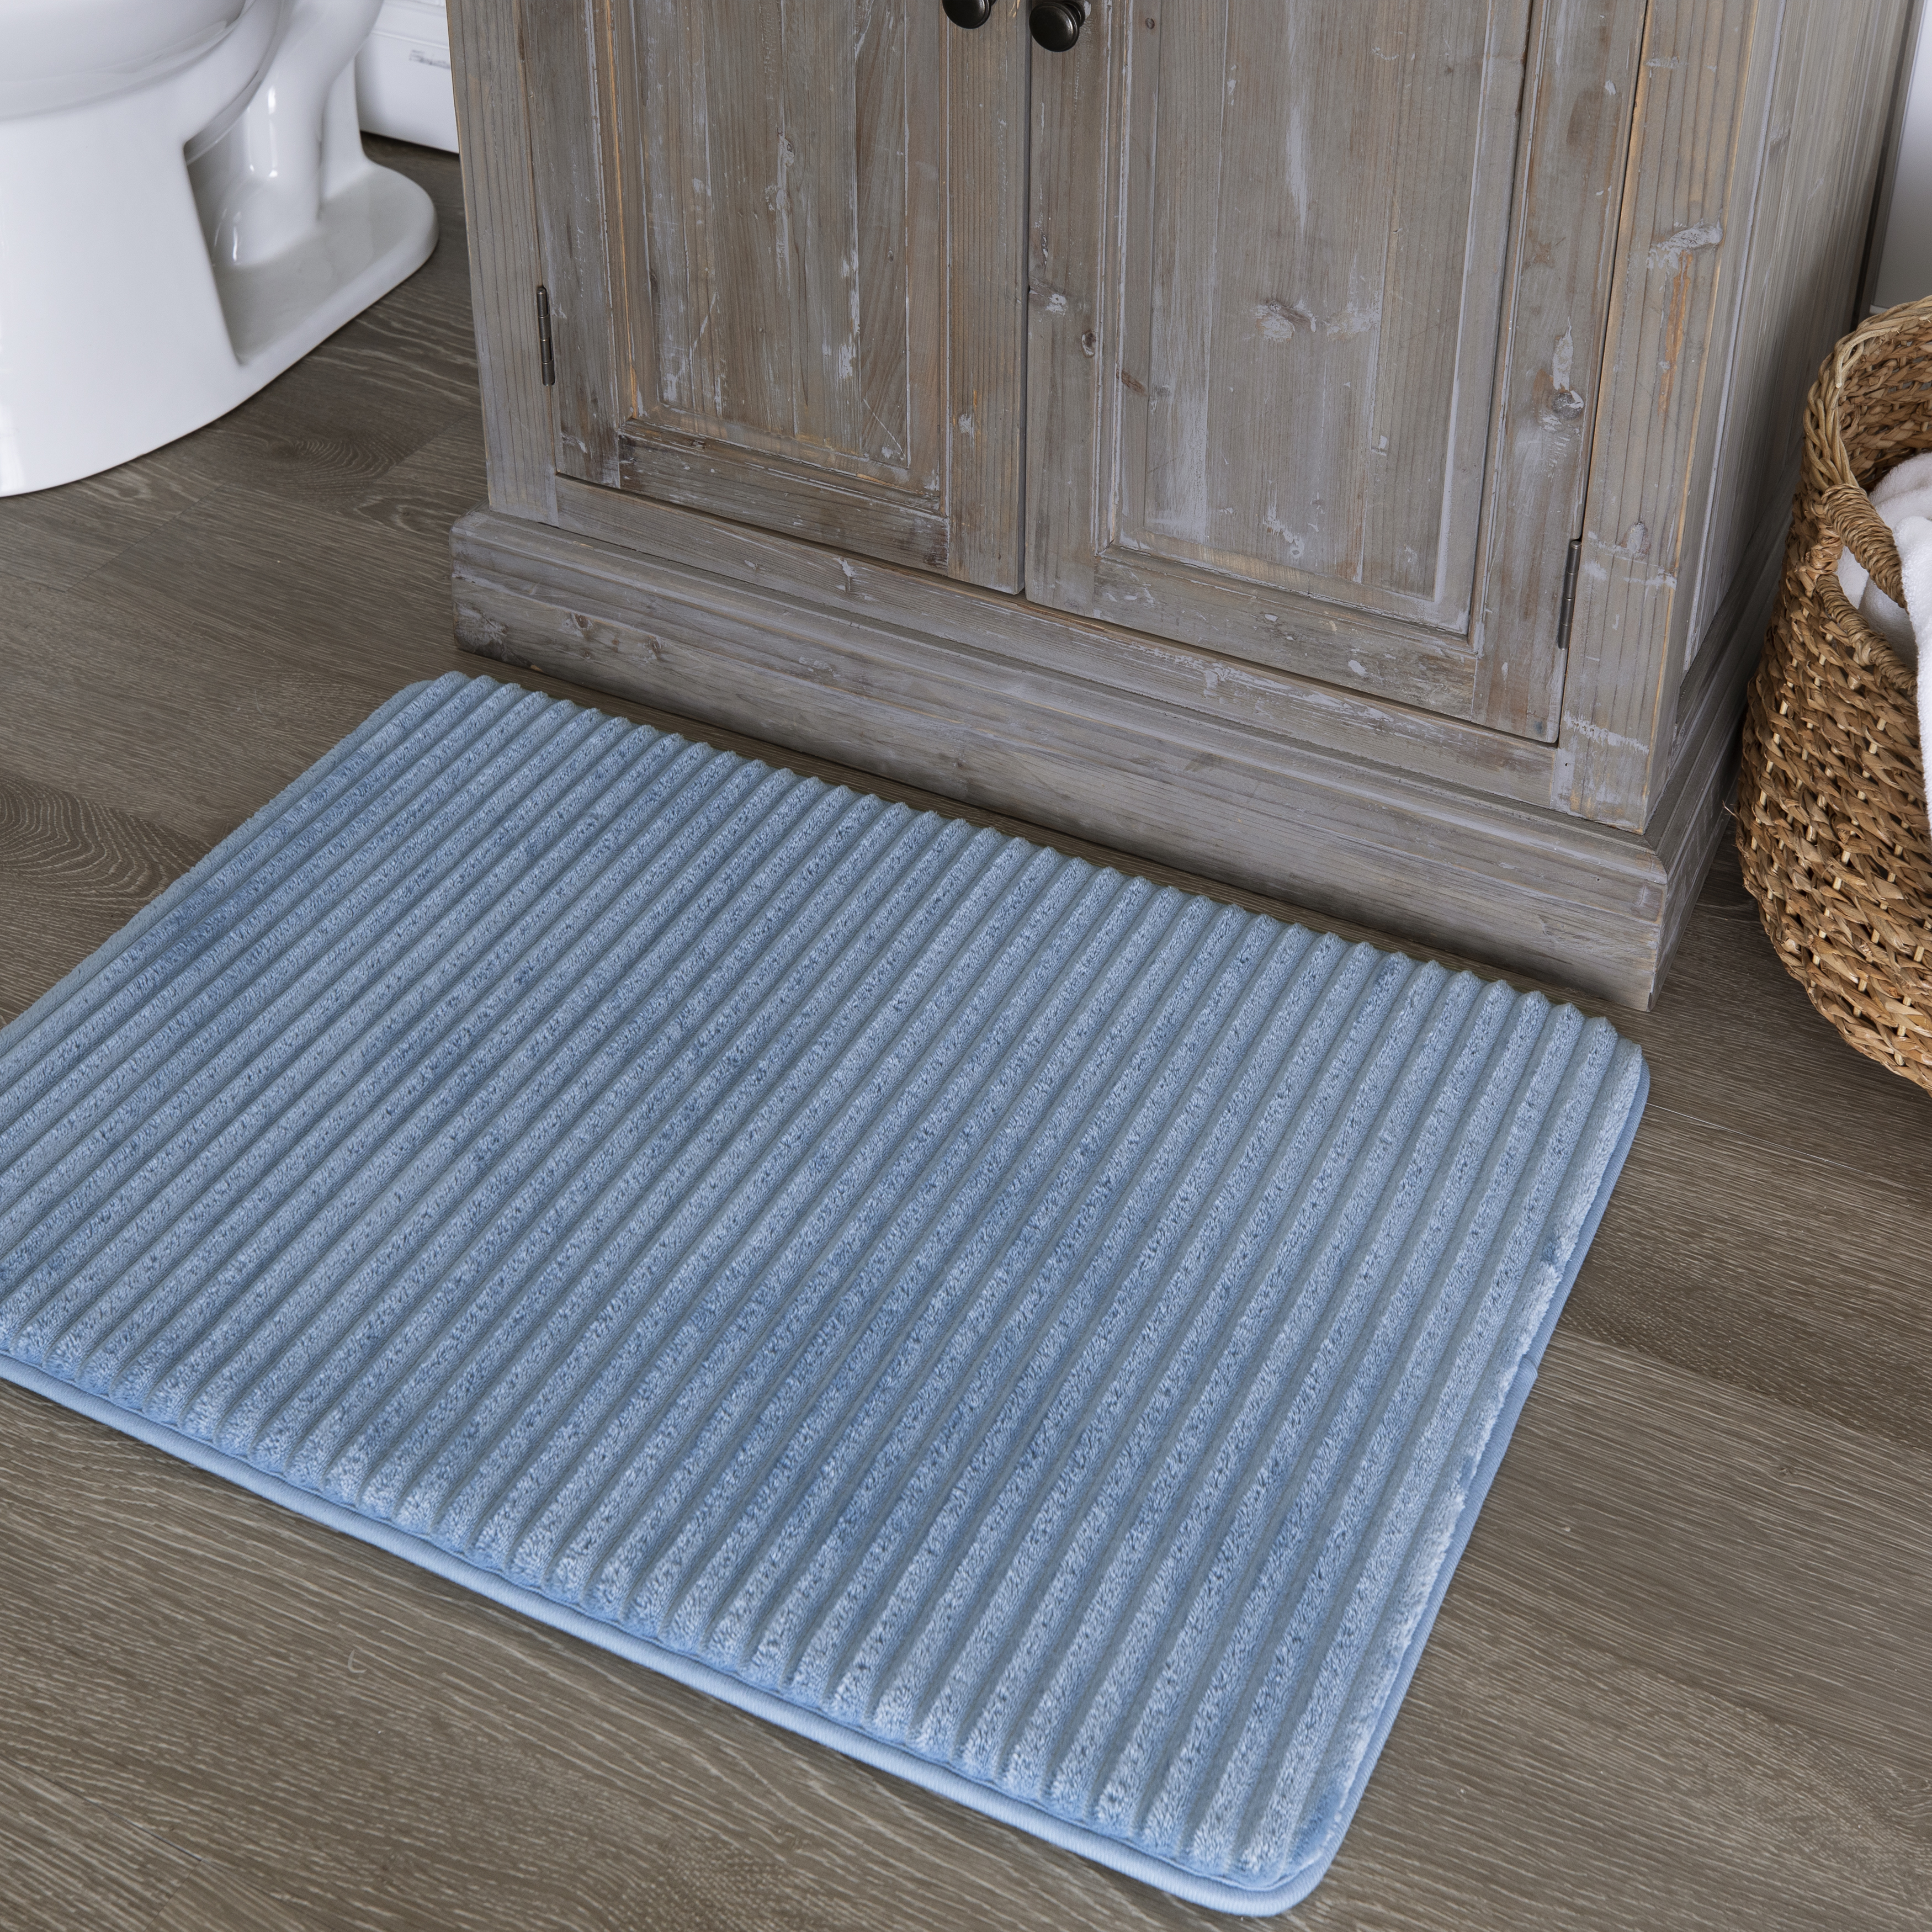 Microfiber VSUSN Bathroom Mat Non Slip Bath Mat Memory Foam Bathroom Carpet Absorbent Easy to clean Black, 30 x 50 cm Rectangle